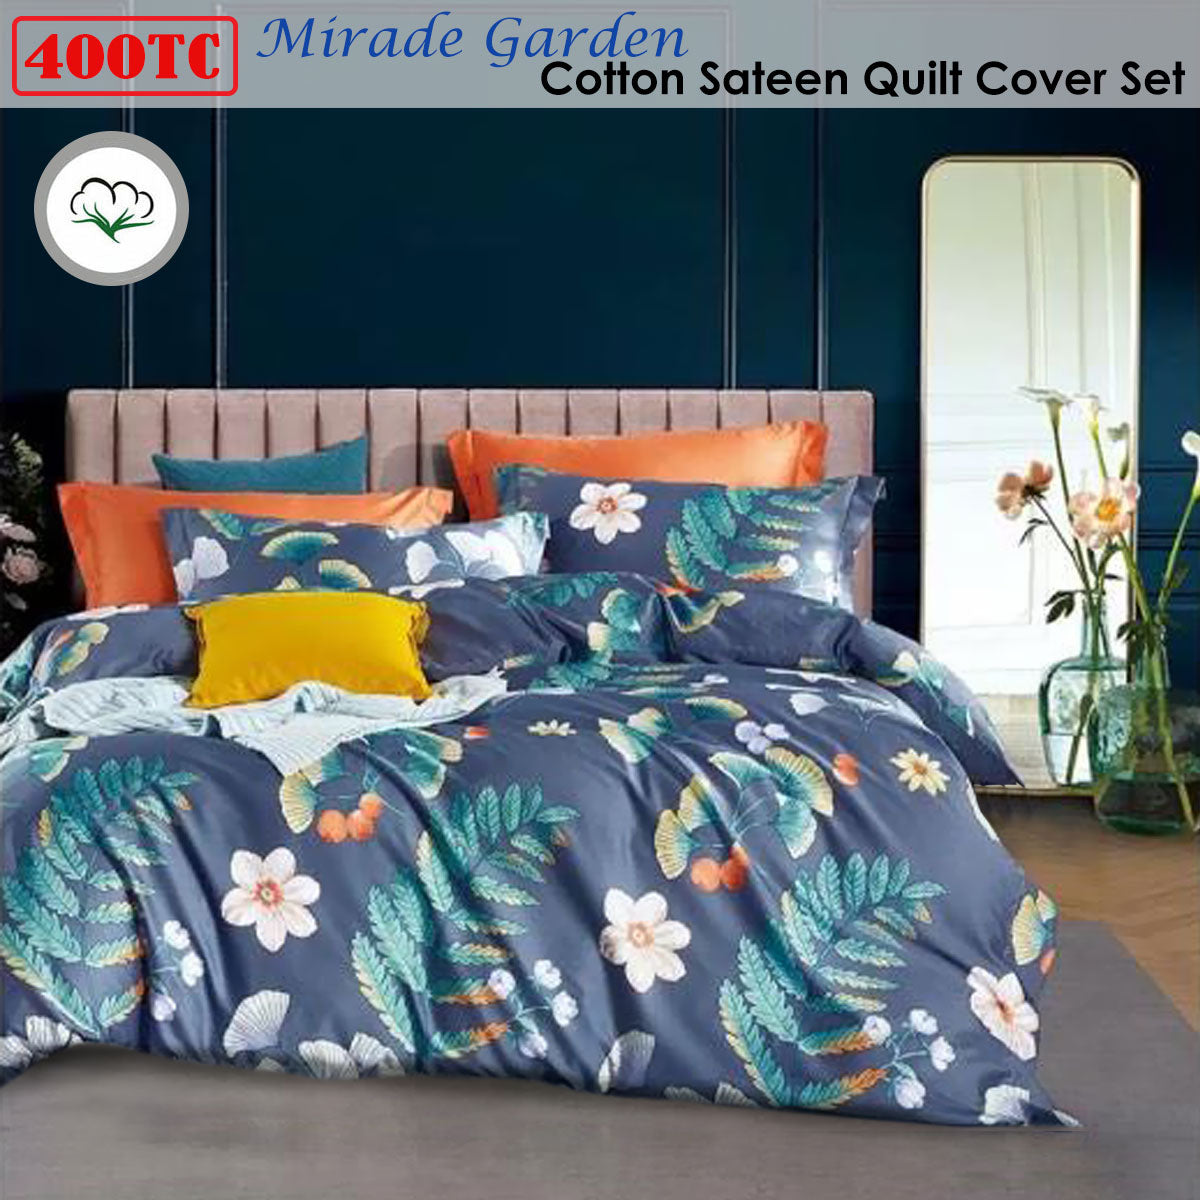 400TC Cotton Sateen Quilt Cover Set Mirade Garden Queen